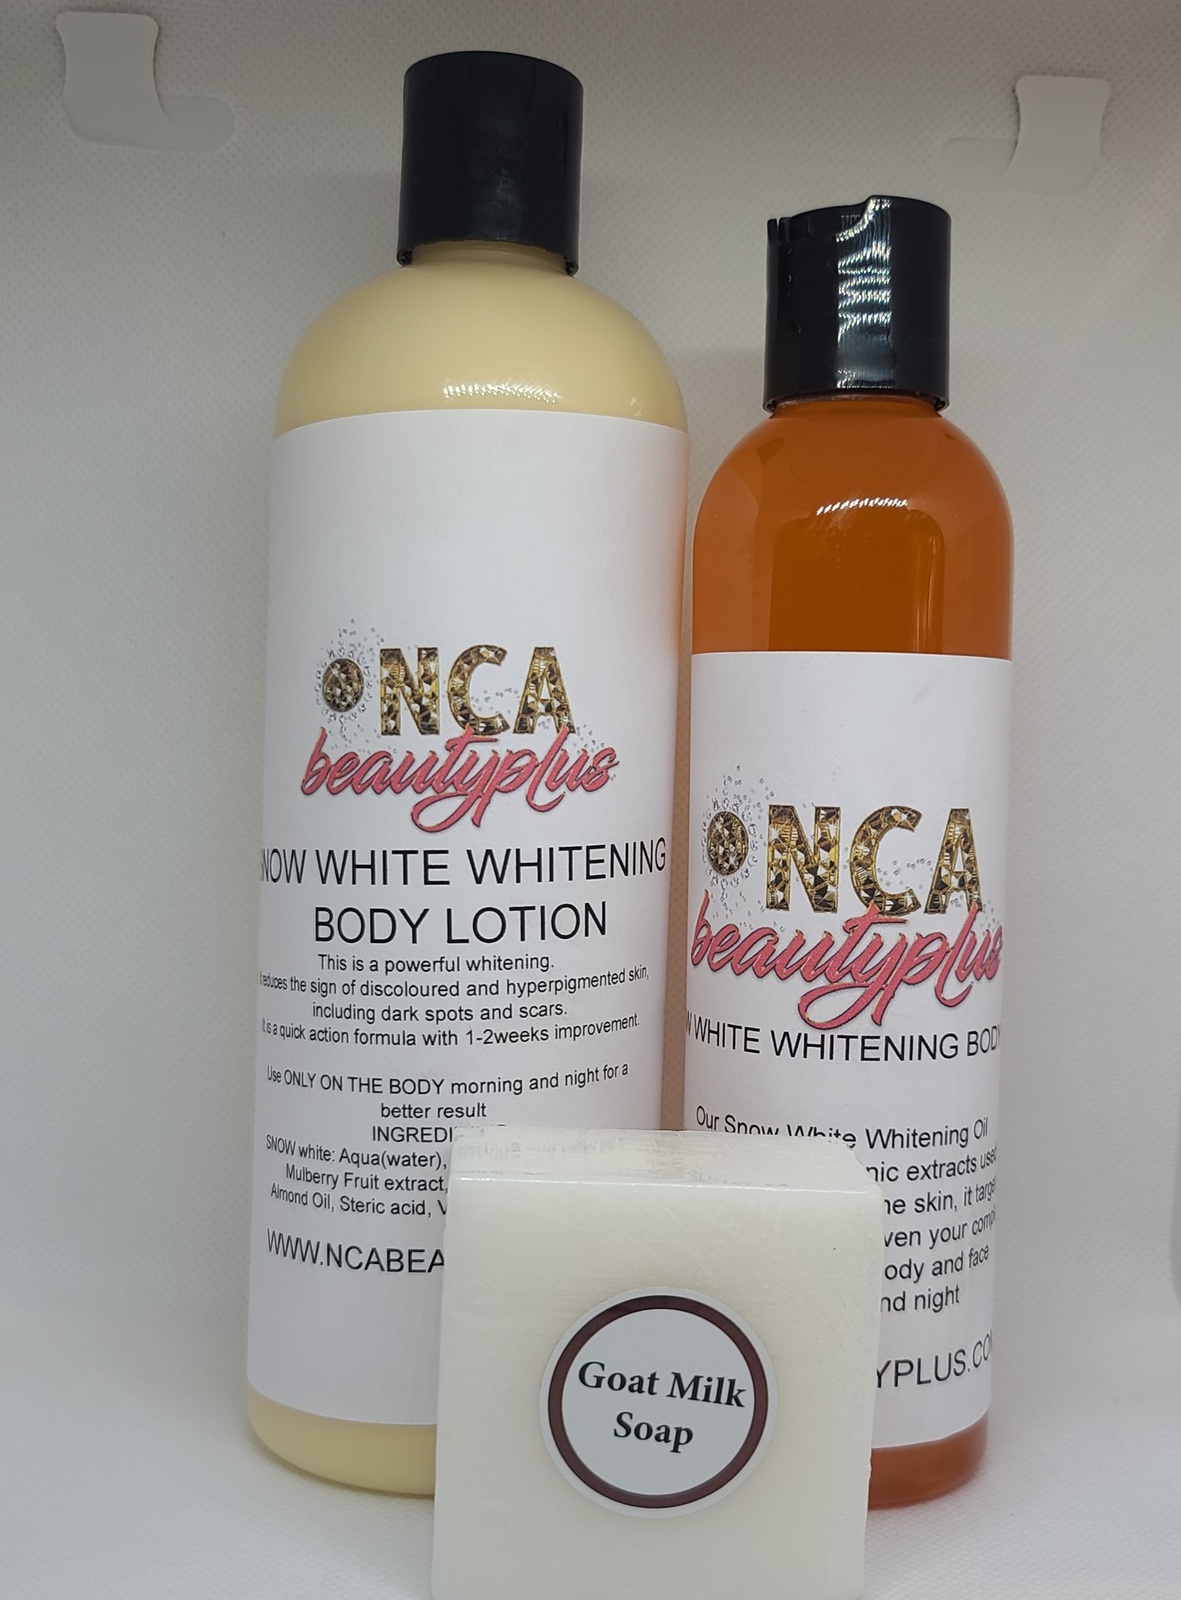 Rapid snow white whitening body oil lotion, soap